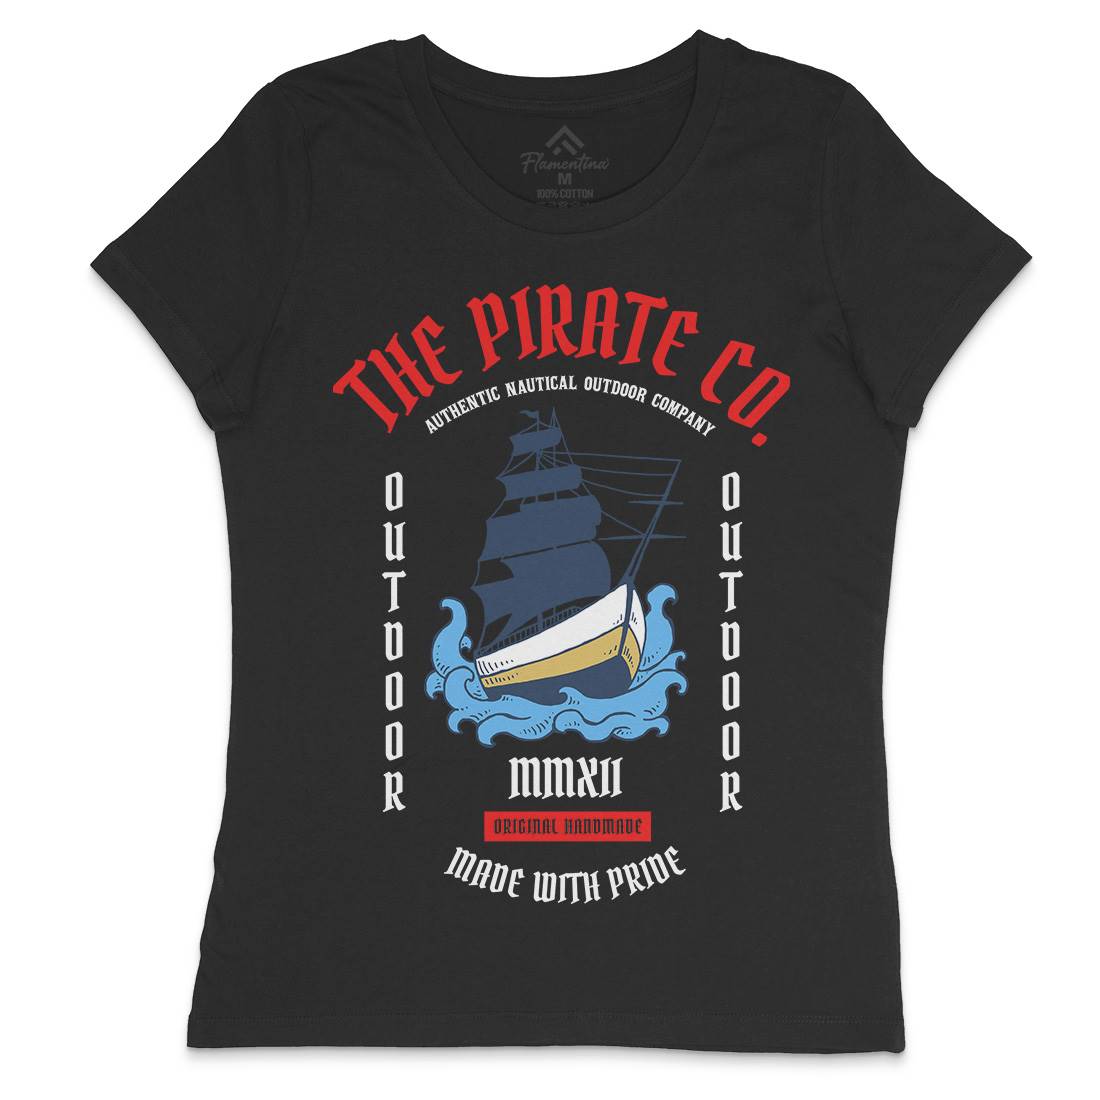 The Ship Womens Crew Neck T-Shirt Navy C790